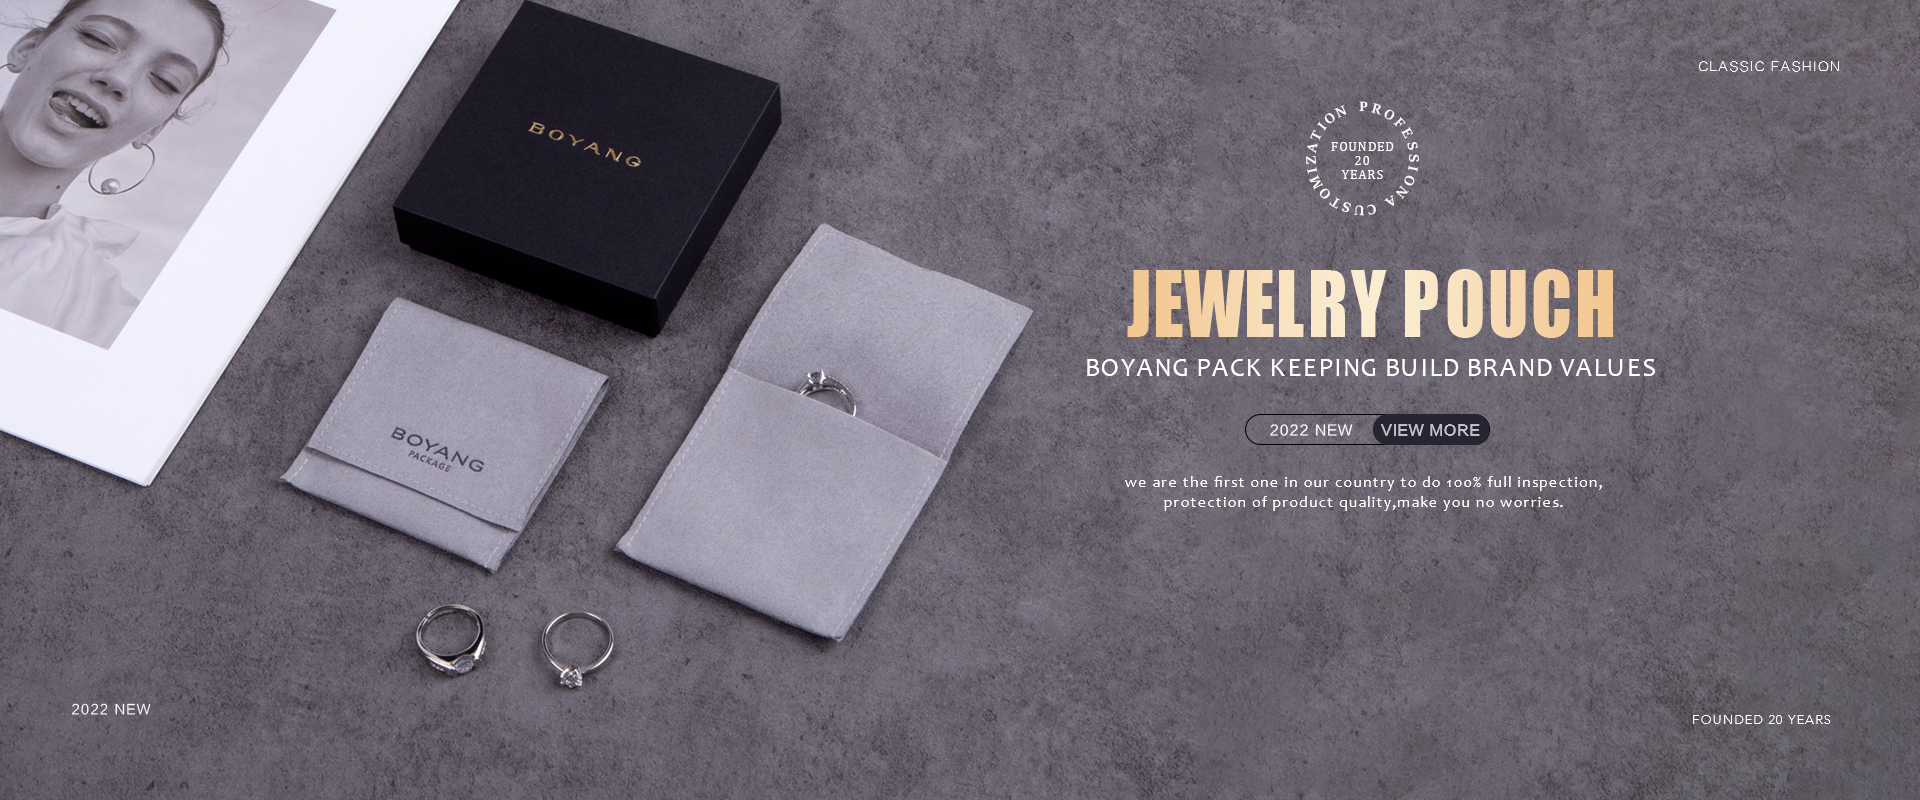 custom jewelry pouches